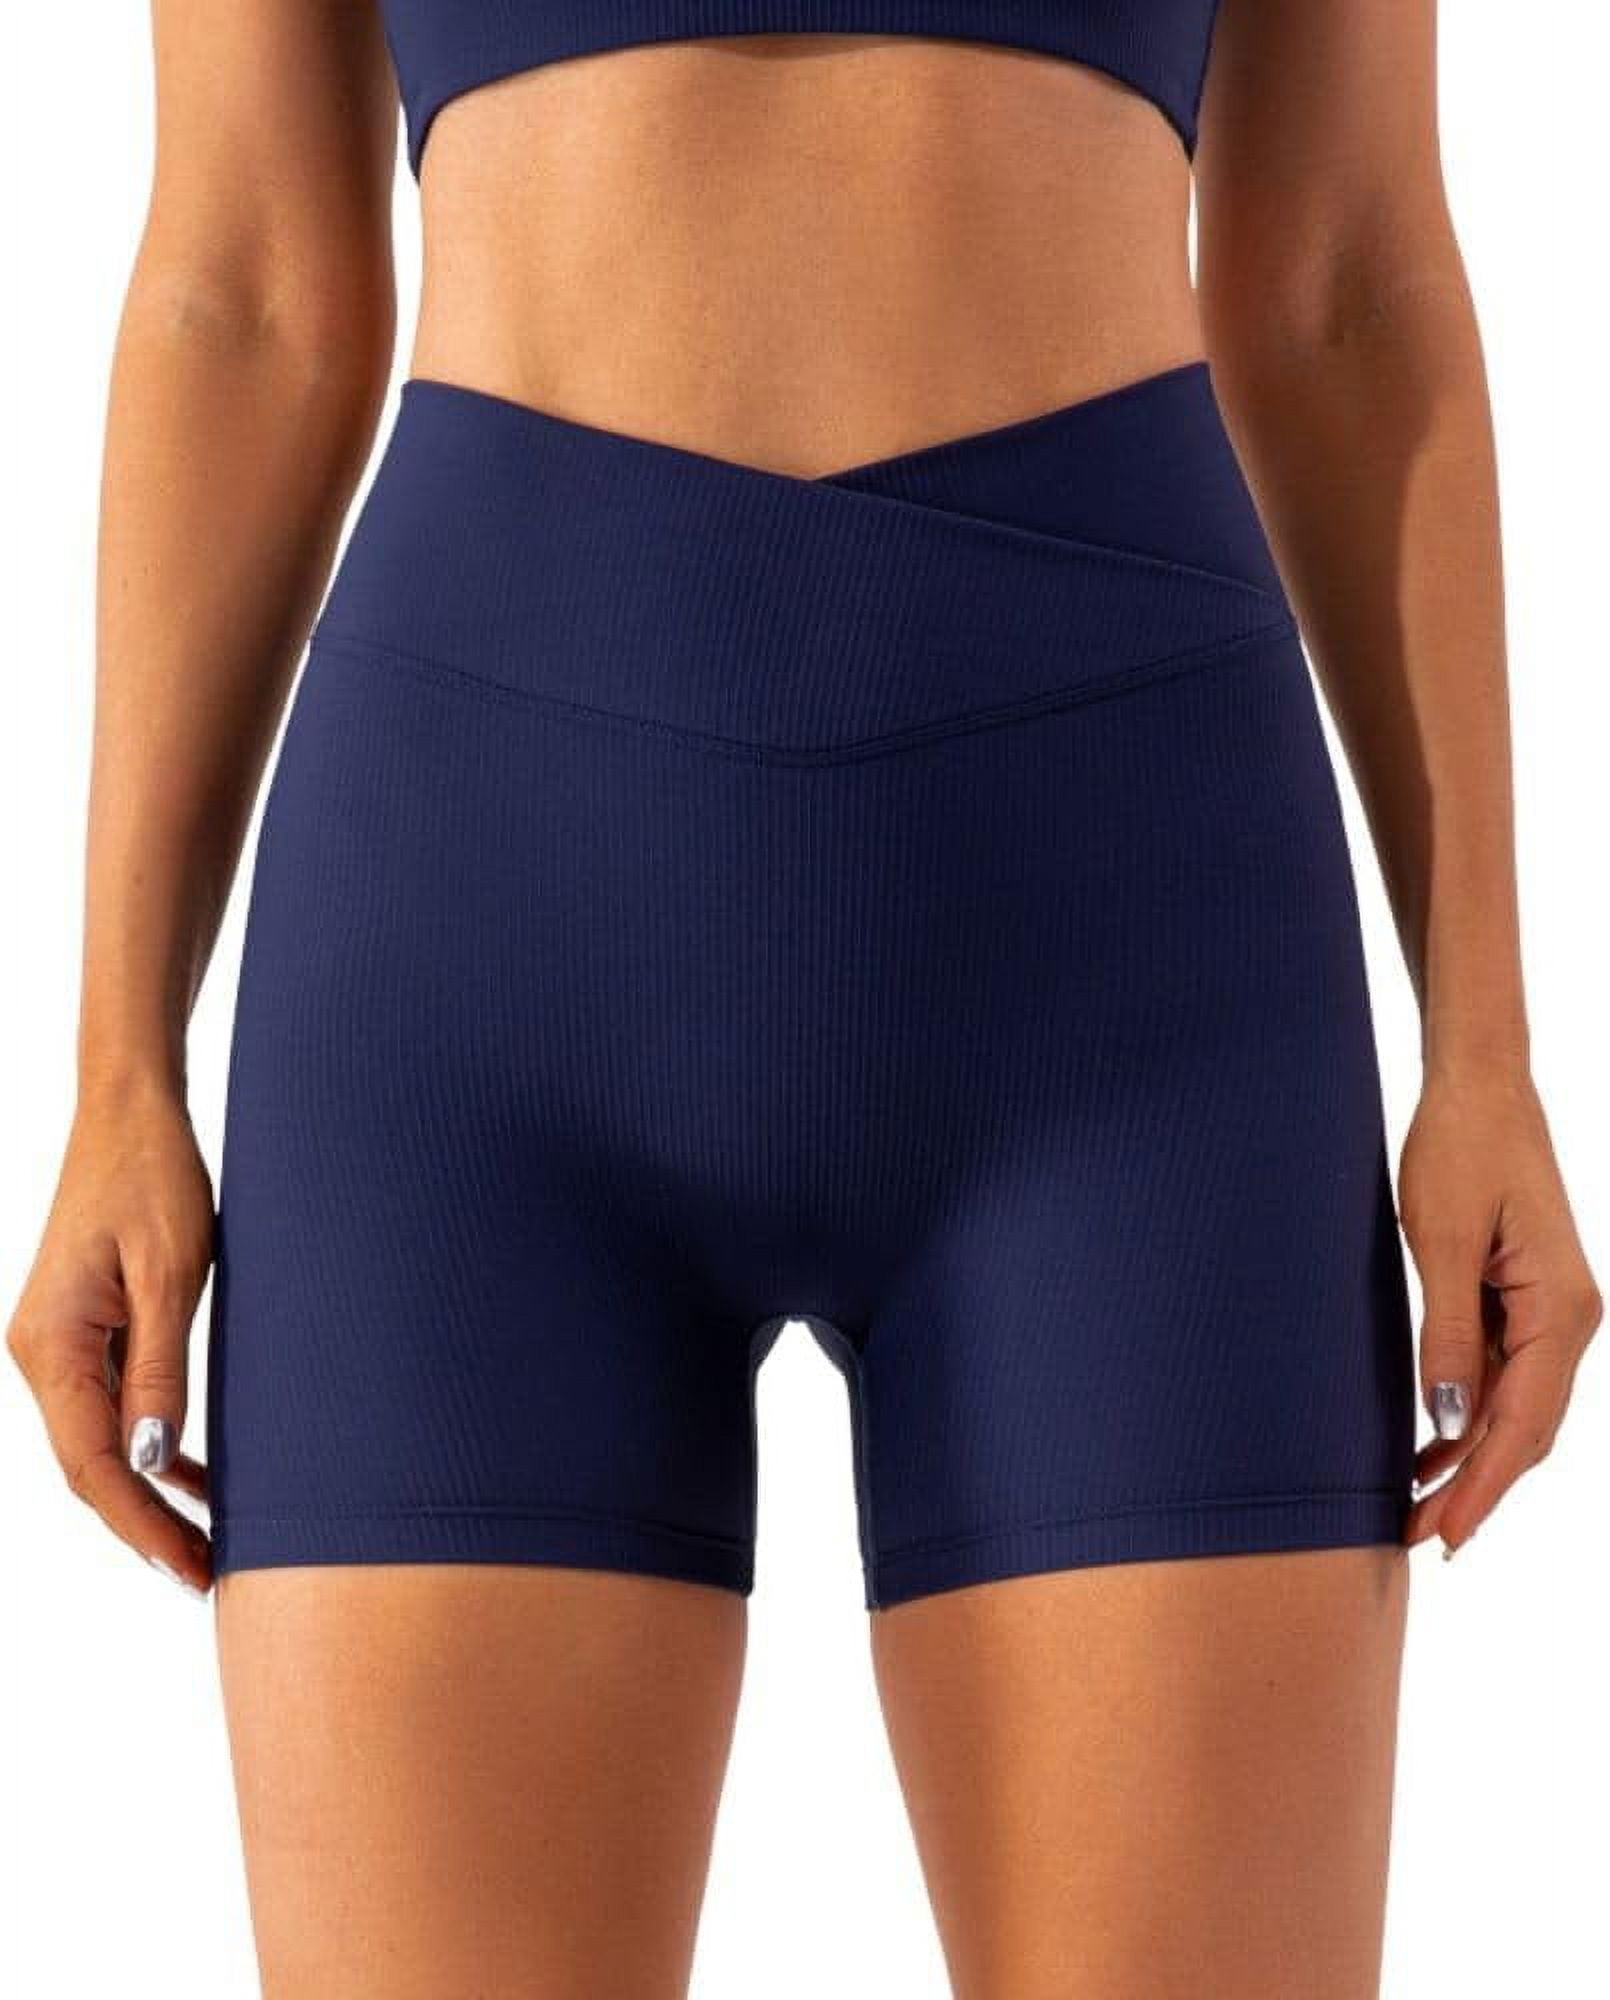 CHYYCNYCH Women's Ribbed Knit Biker Shorts Tummy Control Crossover High ...